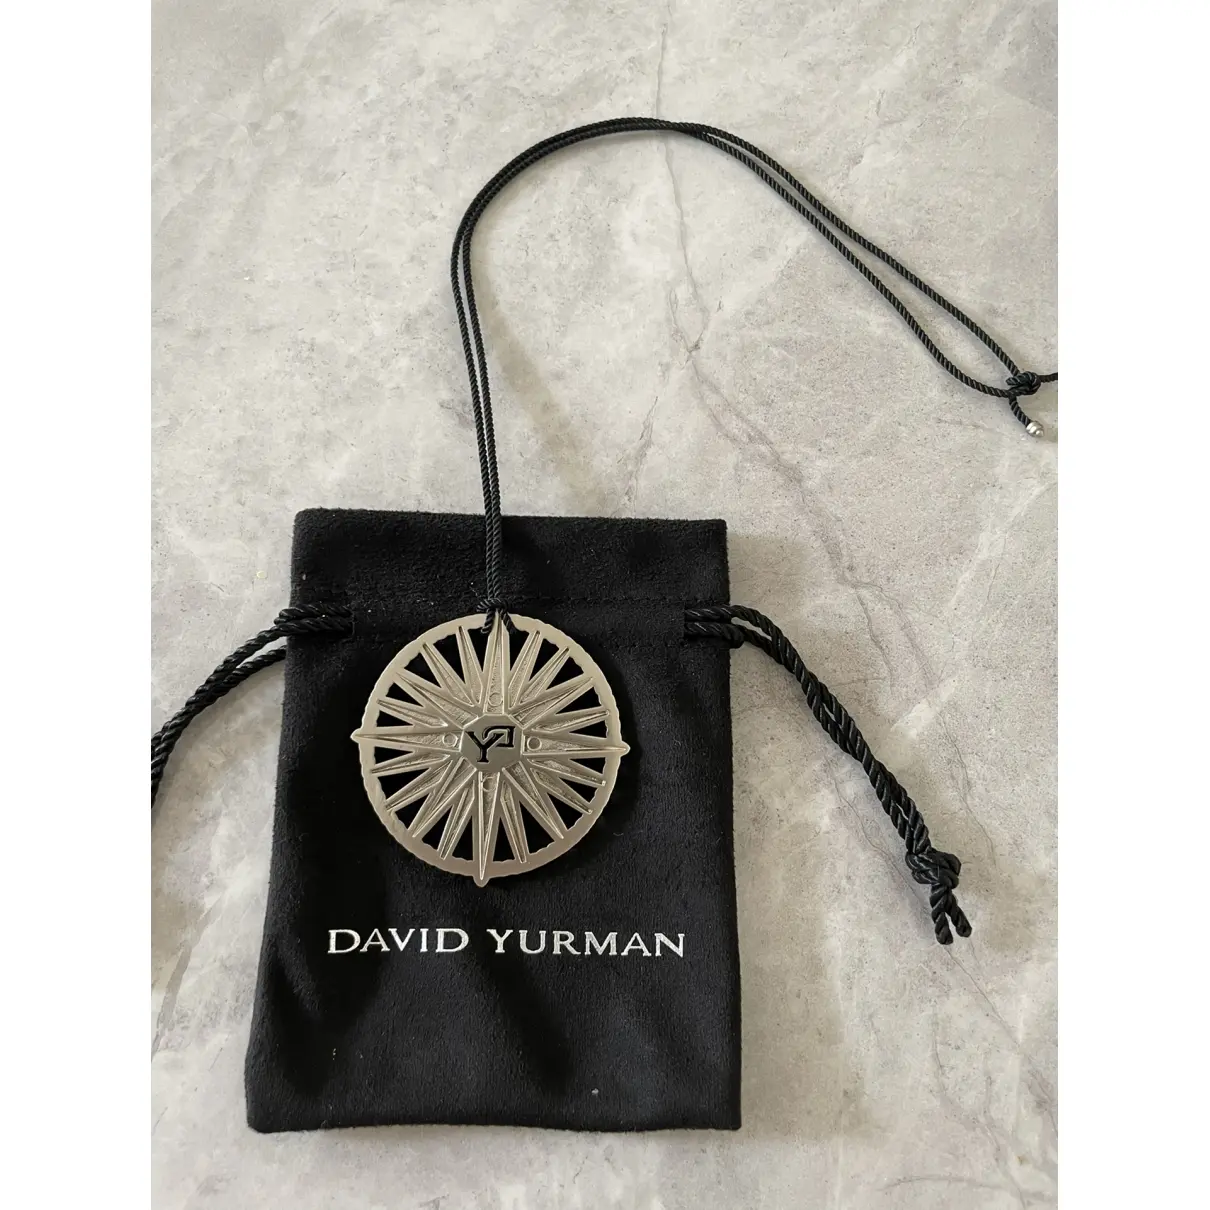 Buy David Yurman Necklace online